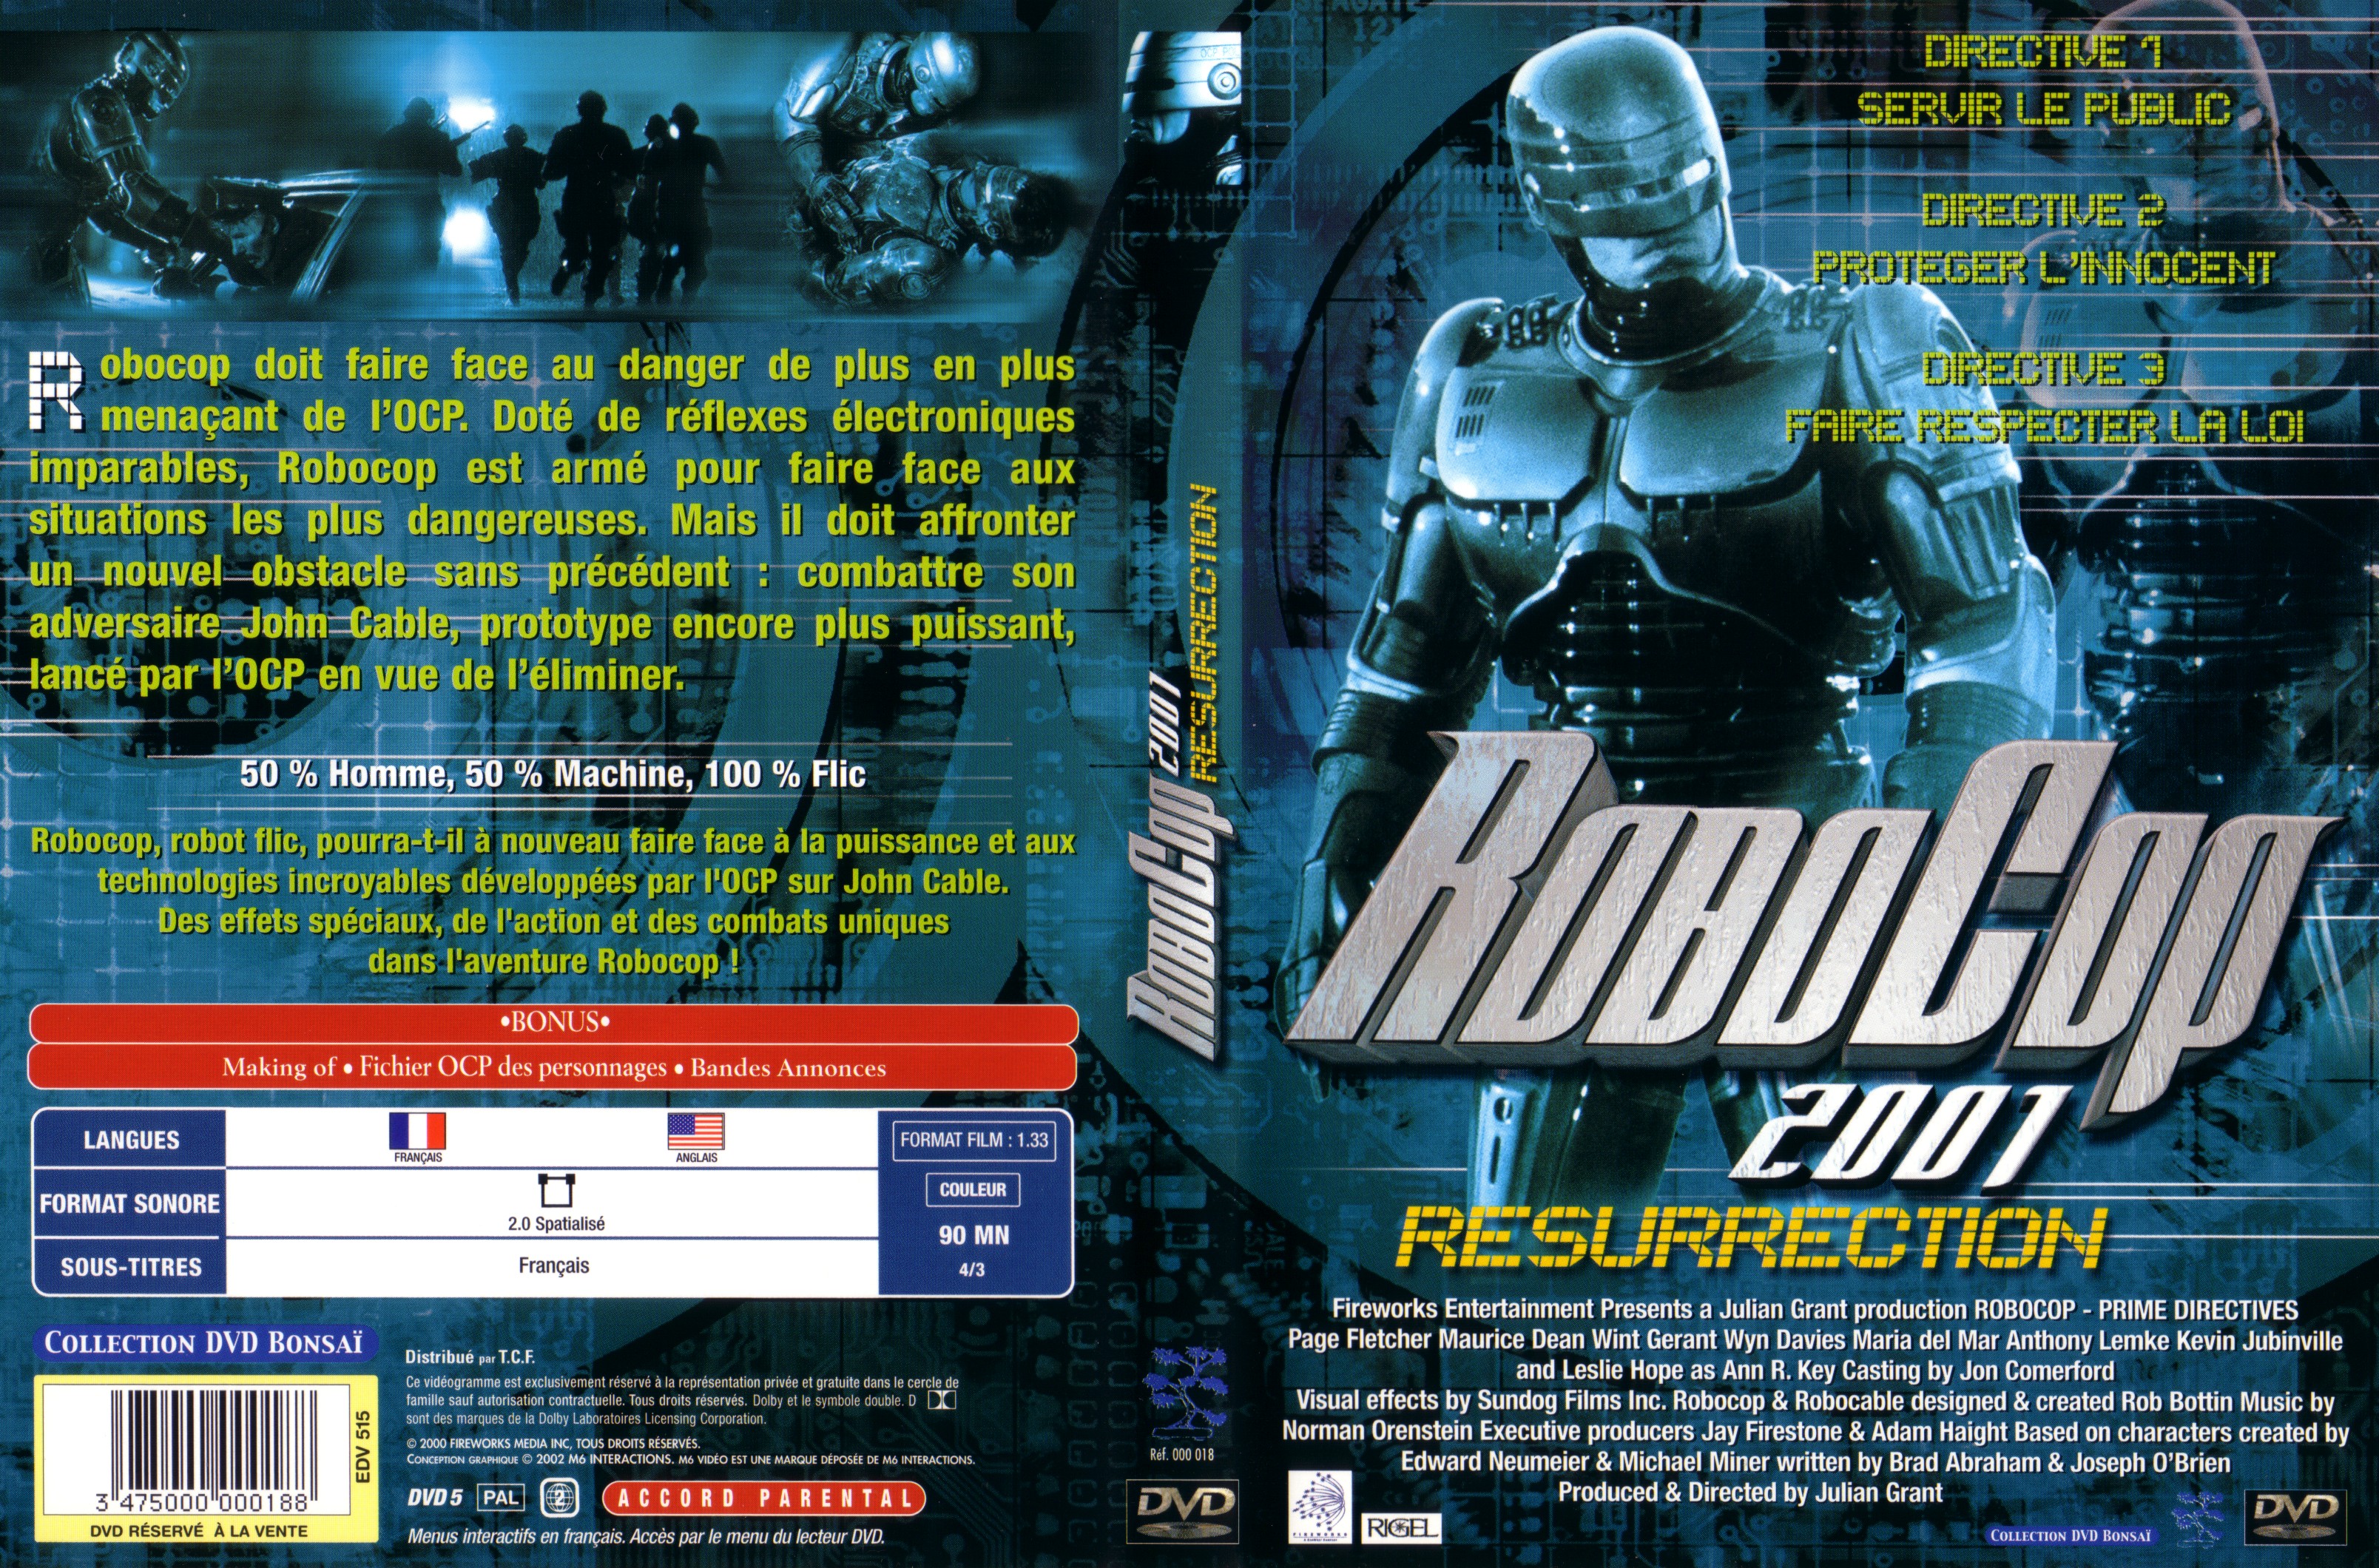 Jaquette DVD Robocop 2001 - resurrection